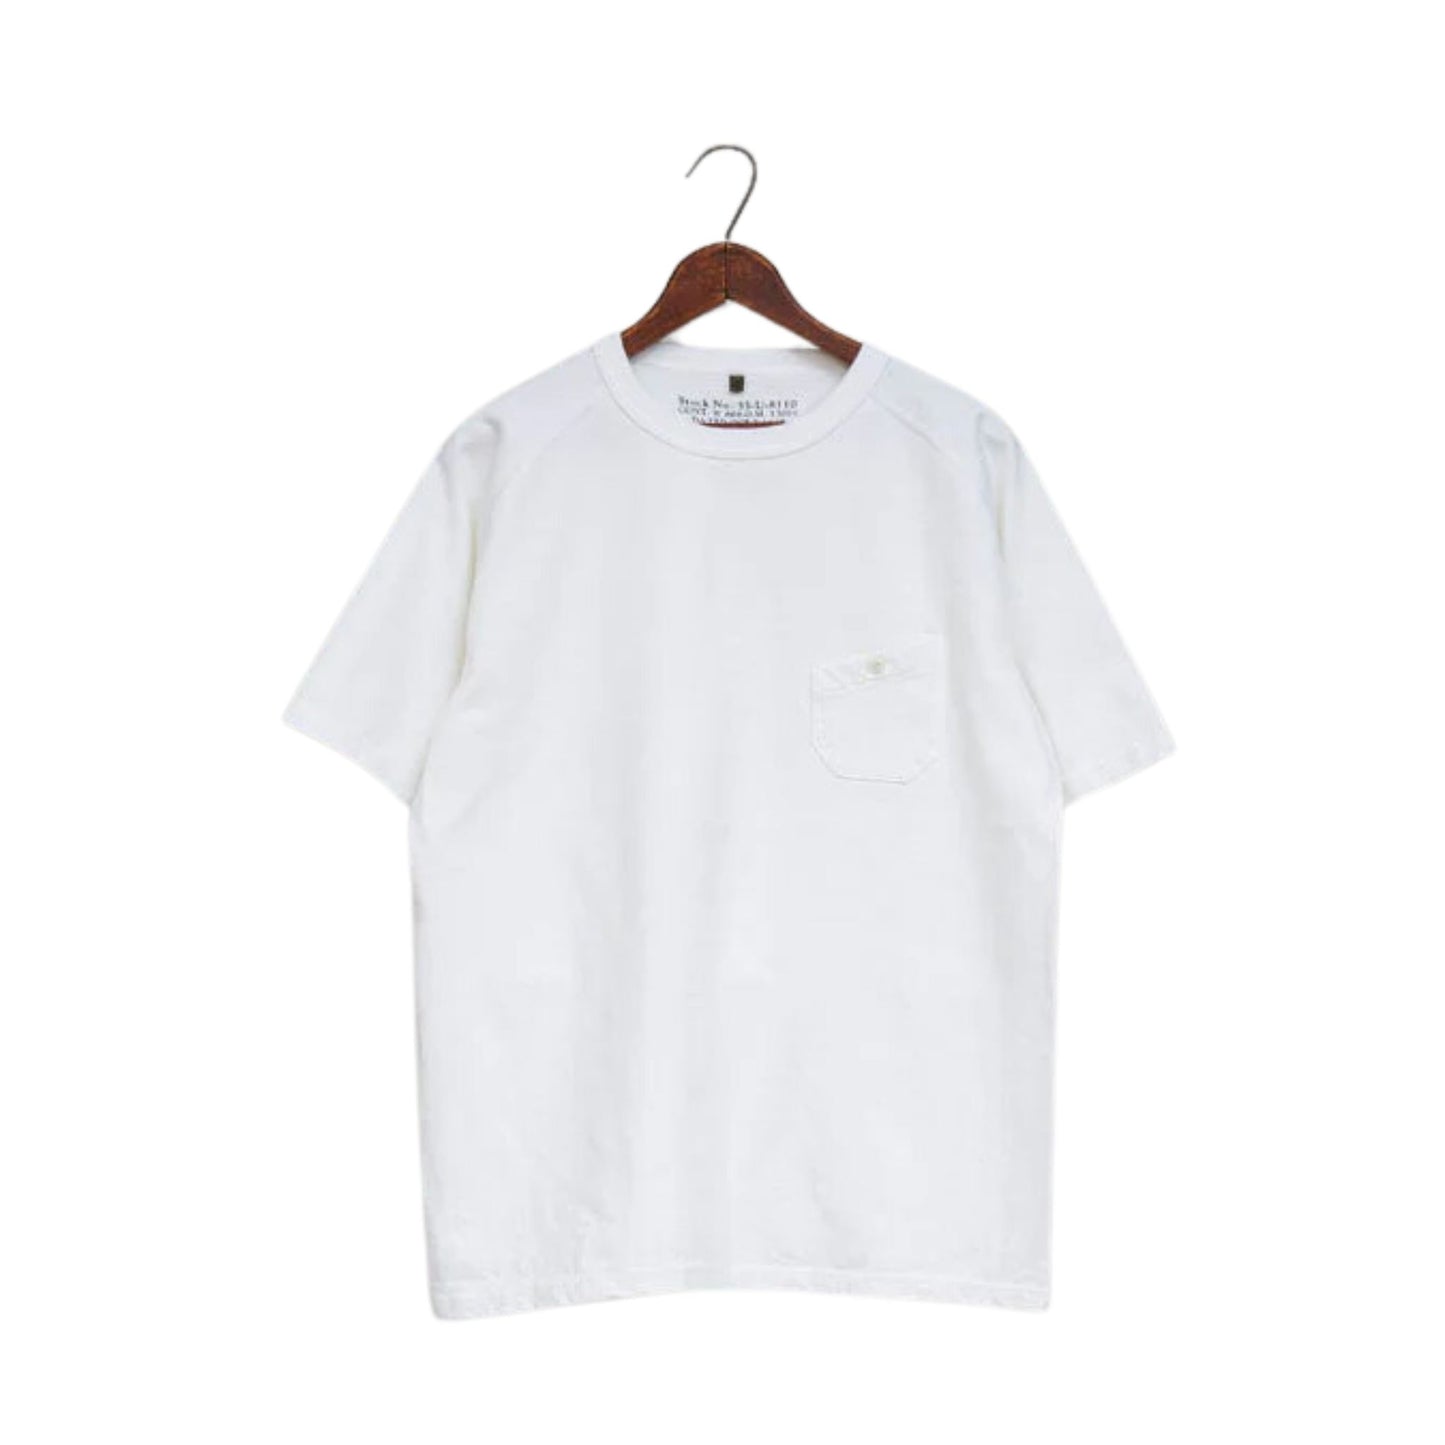 NIGEL CABOURN - 9.5oz Basic T-shirt Off White